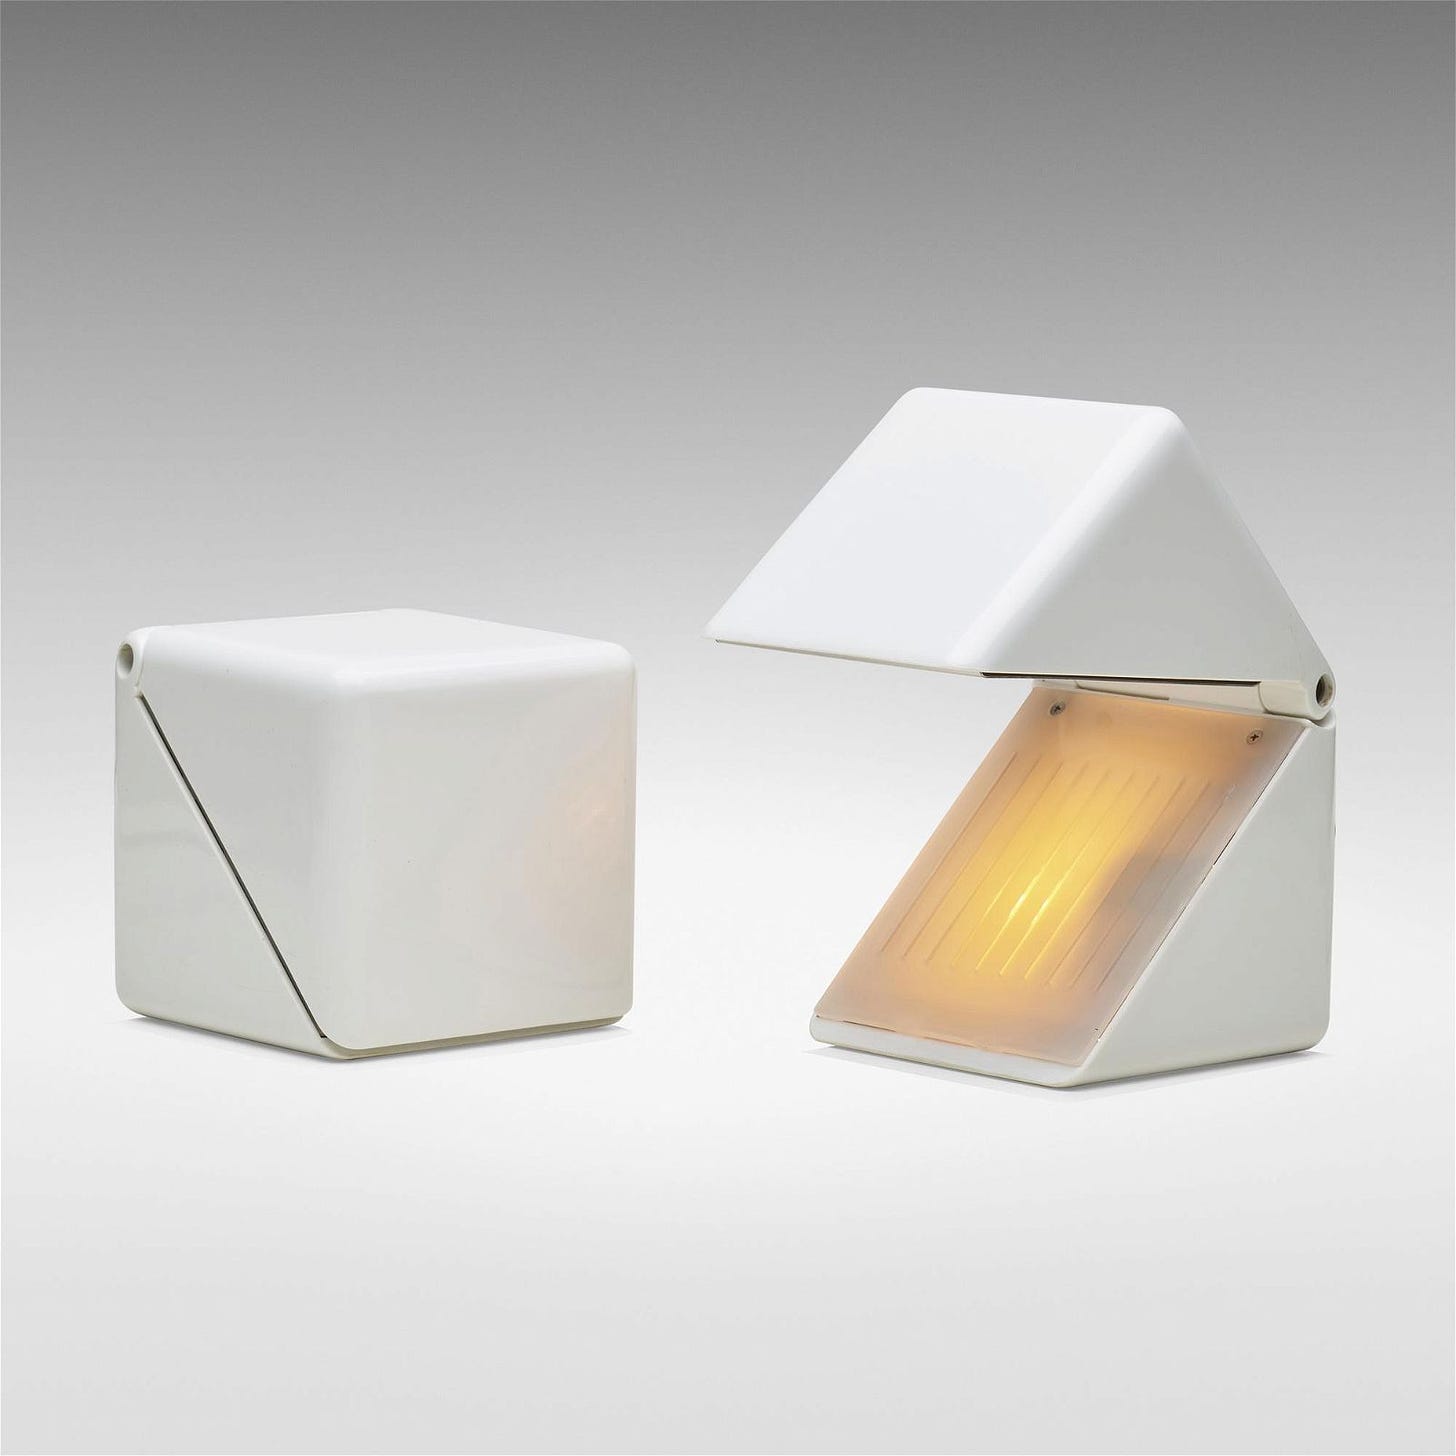 Cesare Casati, Dado table lamps, pair